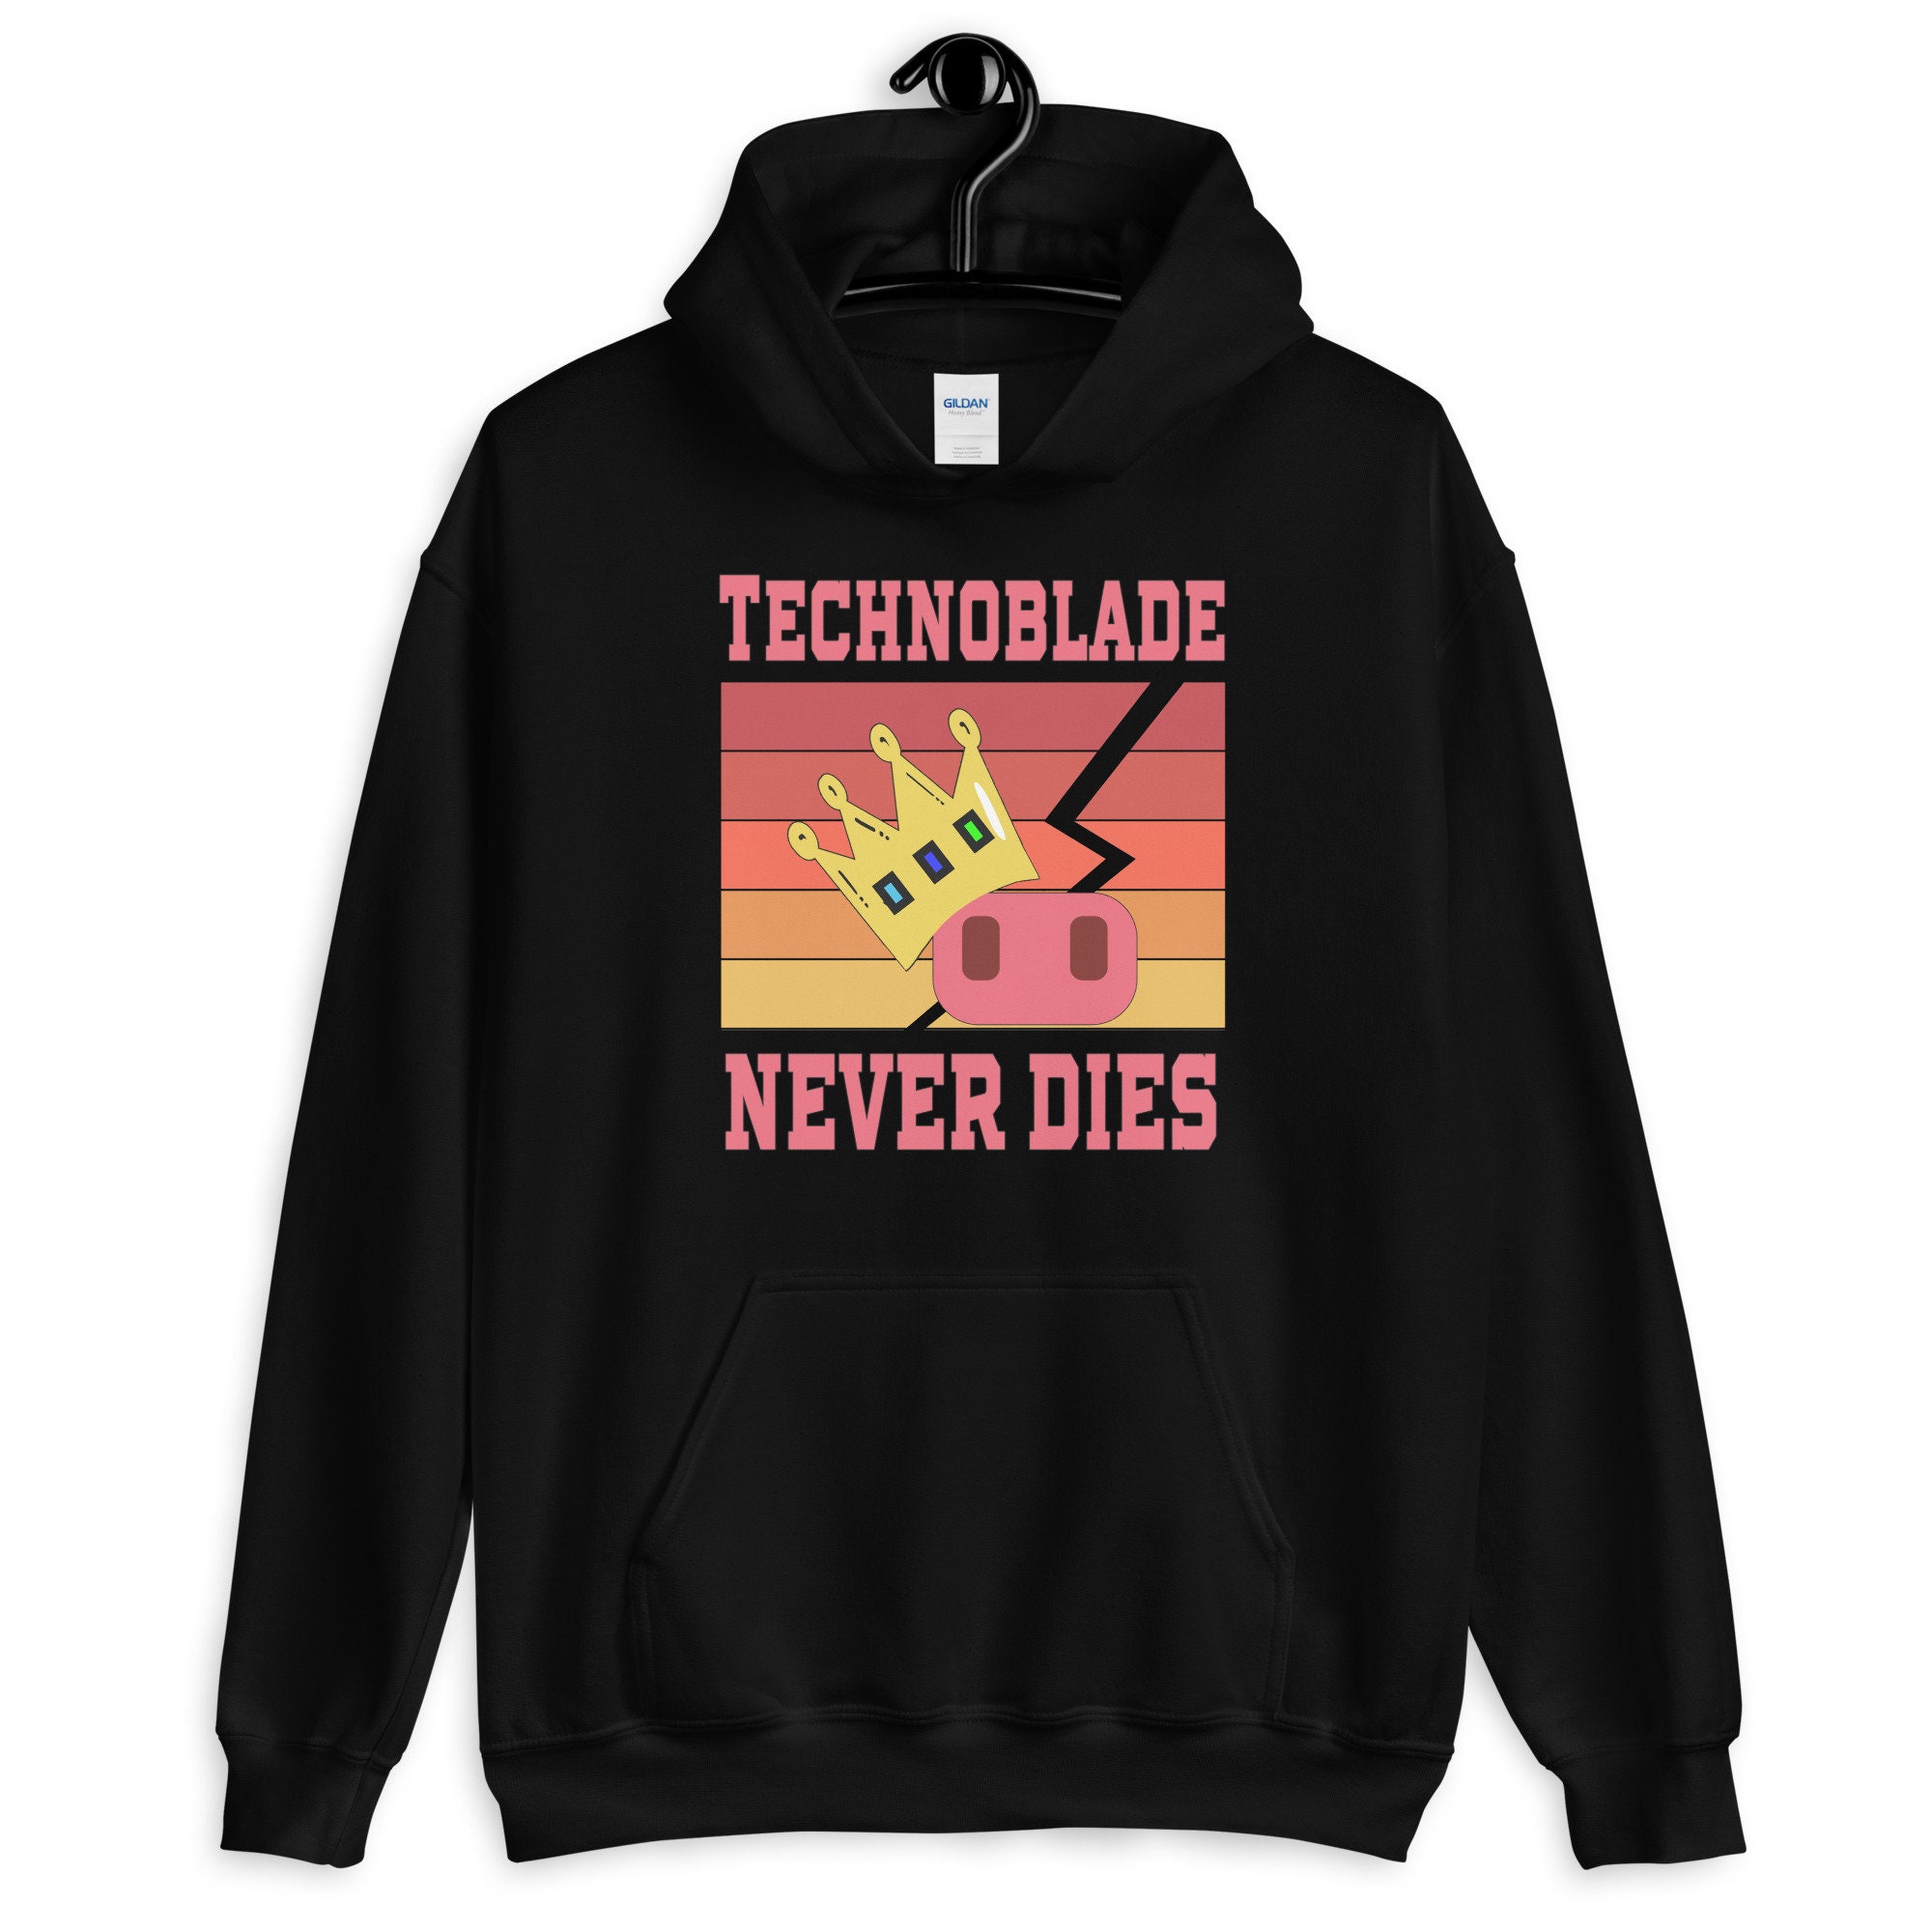 Technoblade never dies - Technoblade merch - Dream SMP Merch Wood Print by  TeamDzShirts - Pixels